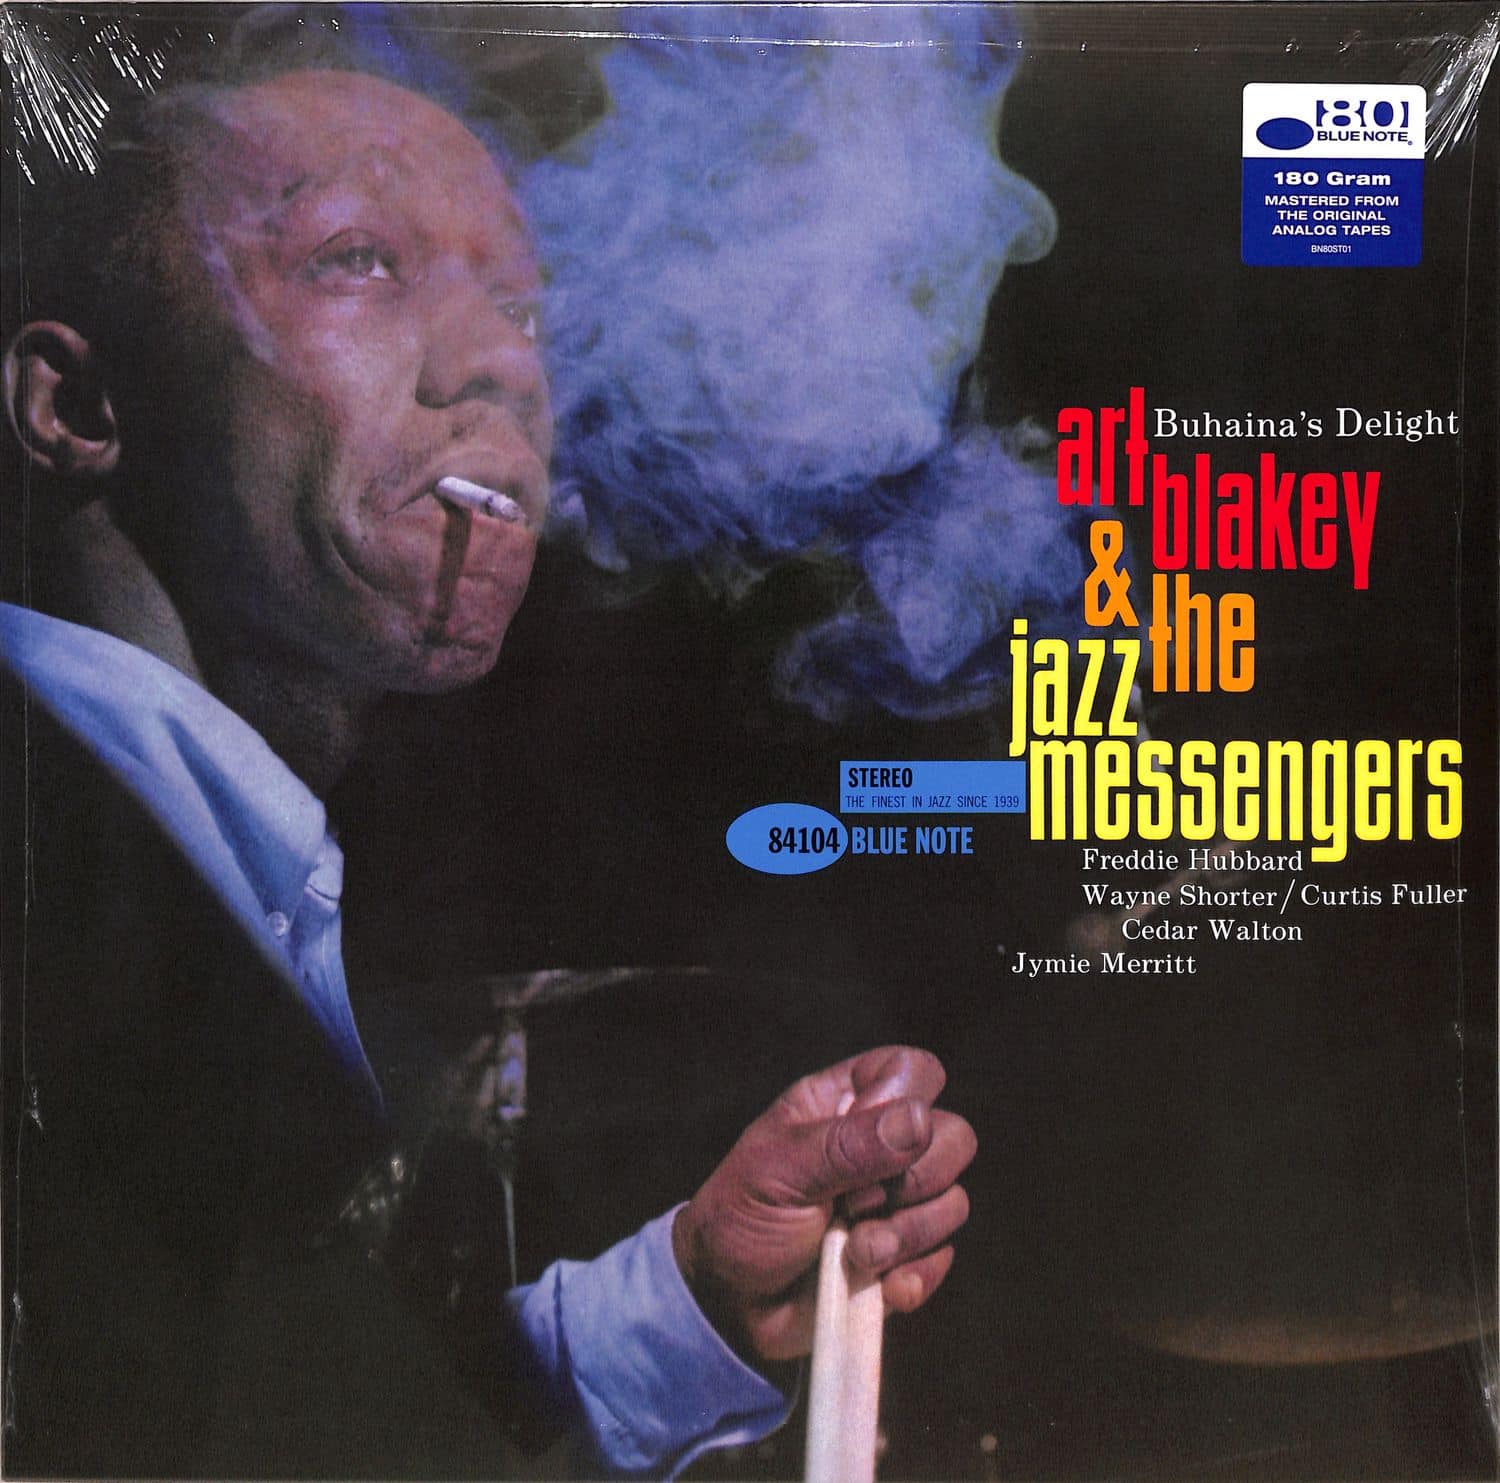 Art Blakey & The Jazz Messengers - BUHAINAS DELIGHT 